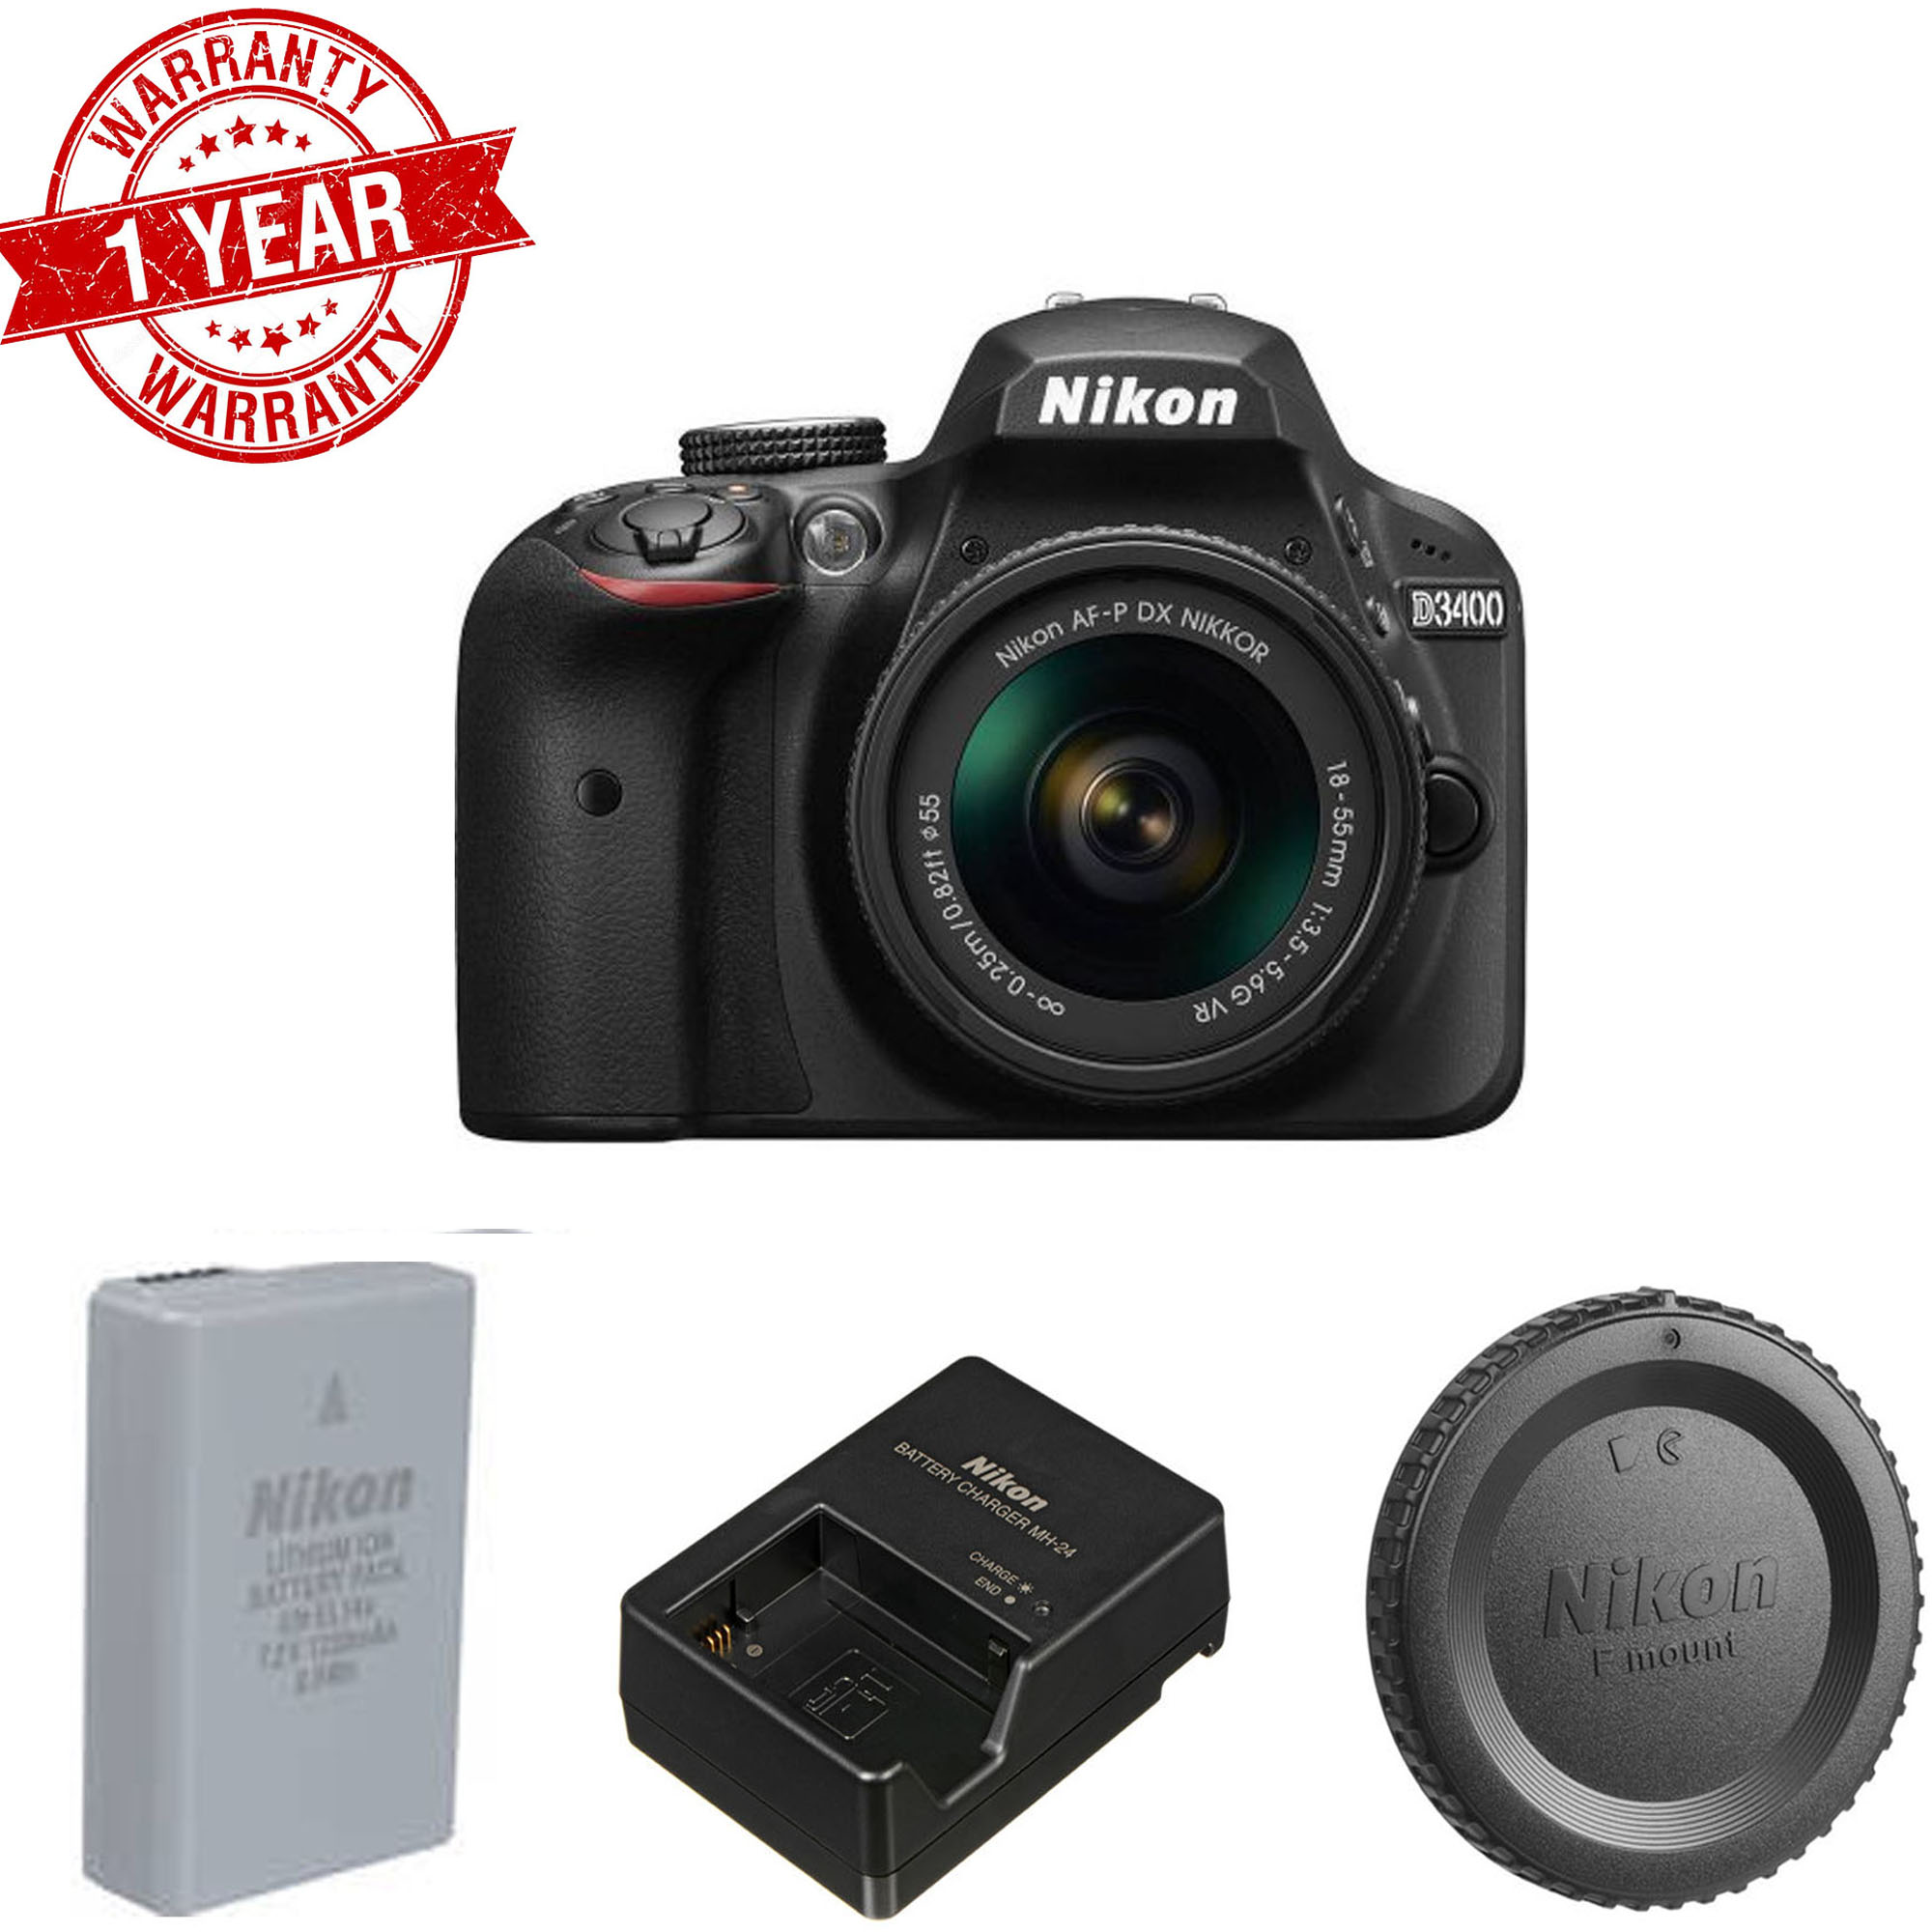 Nikon D3400 DSLR Camera with 18-55mm Lens (Black) USA - image 1 of 1